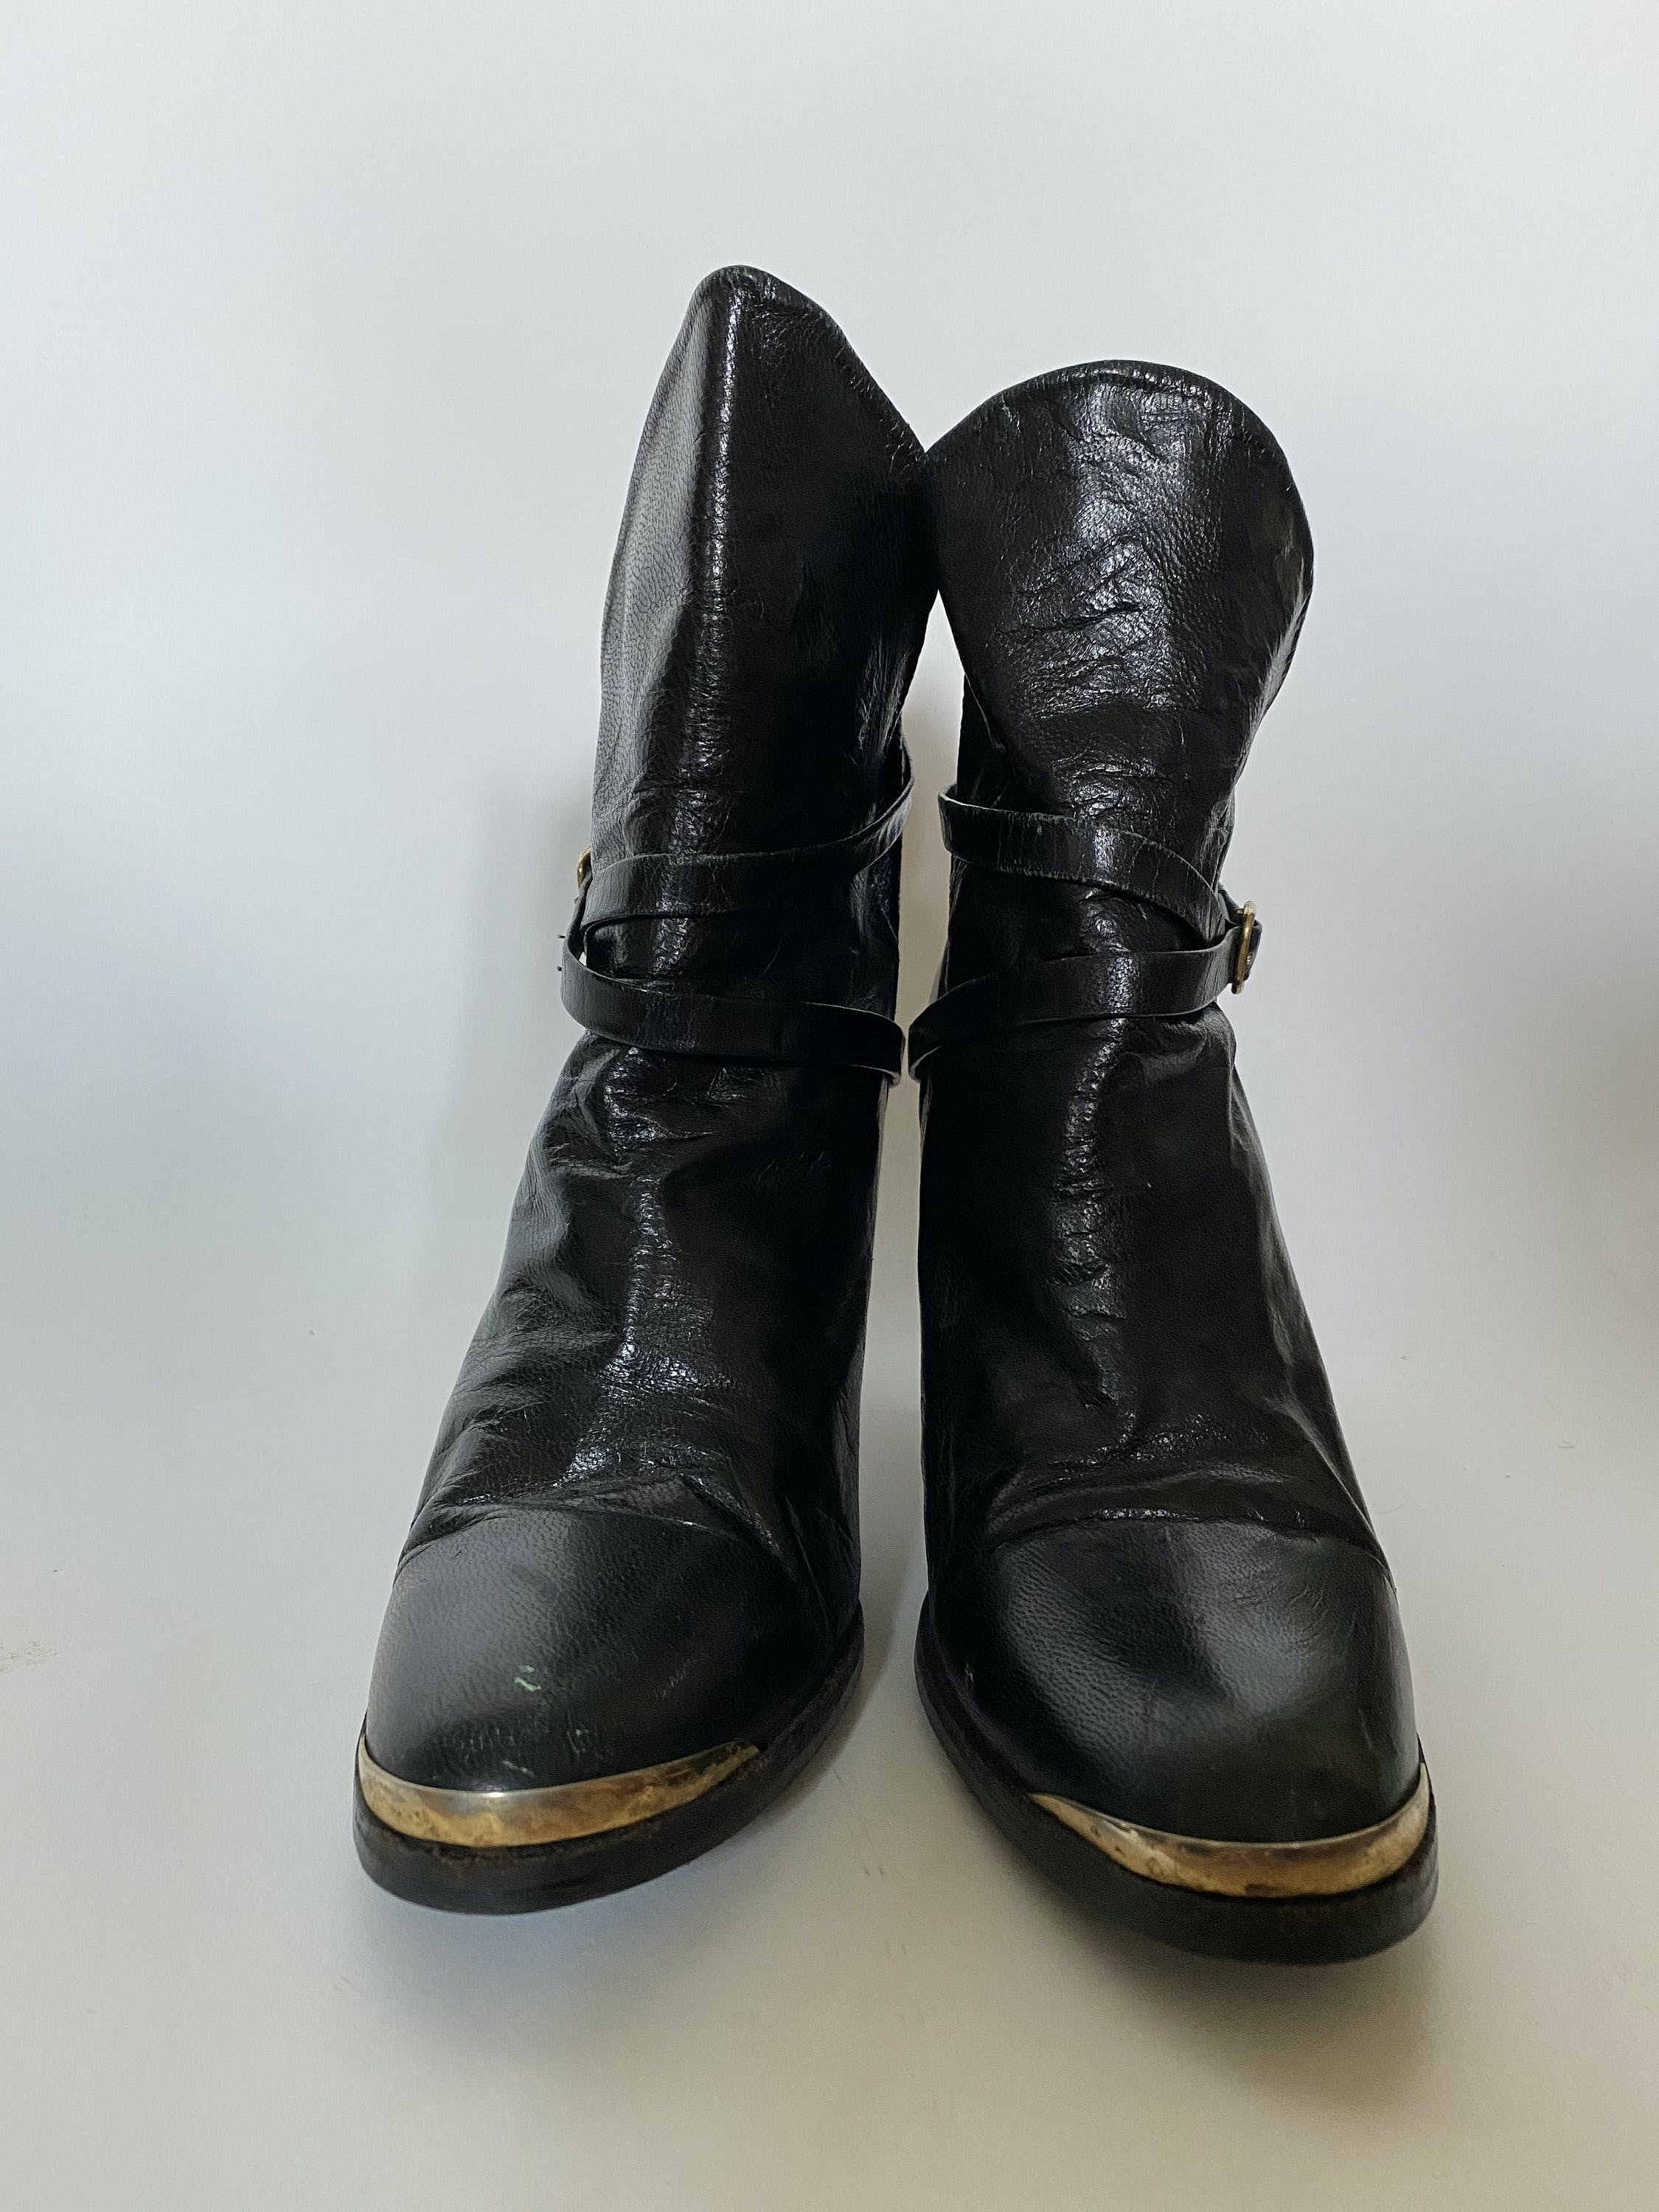 Vintage 80's Black Leather High Heel Ankle Boot | Shop THRILLING